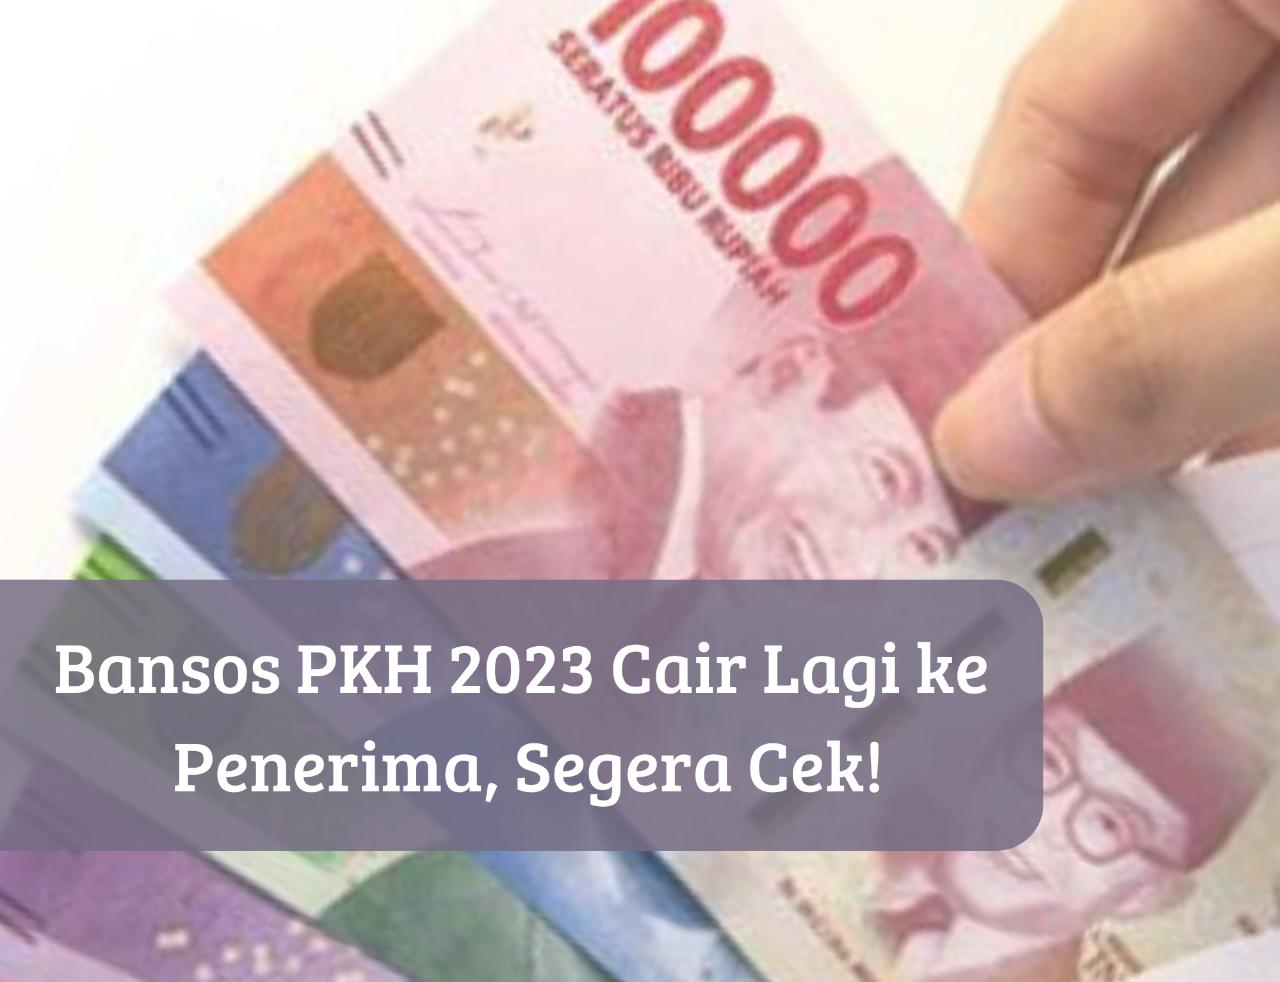 Masih Menanti Bansos? Segera Cek BLT PKH 2023 Tahap 4 di Sini, Ambil Uang Tunai hingga Rp750.000